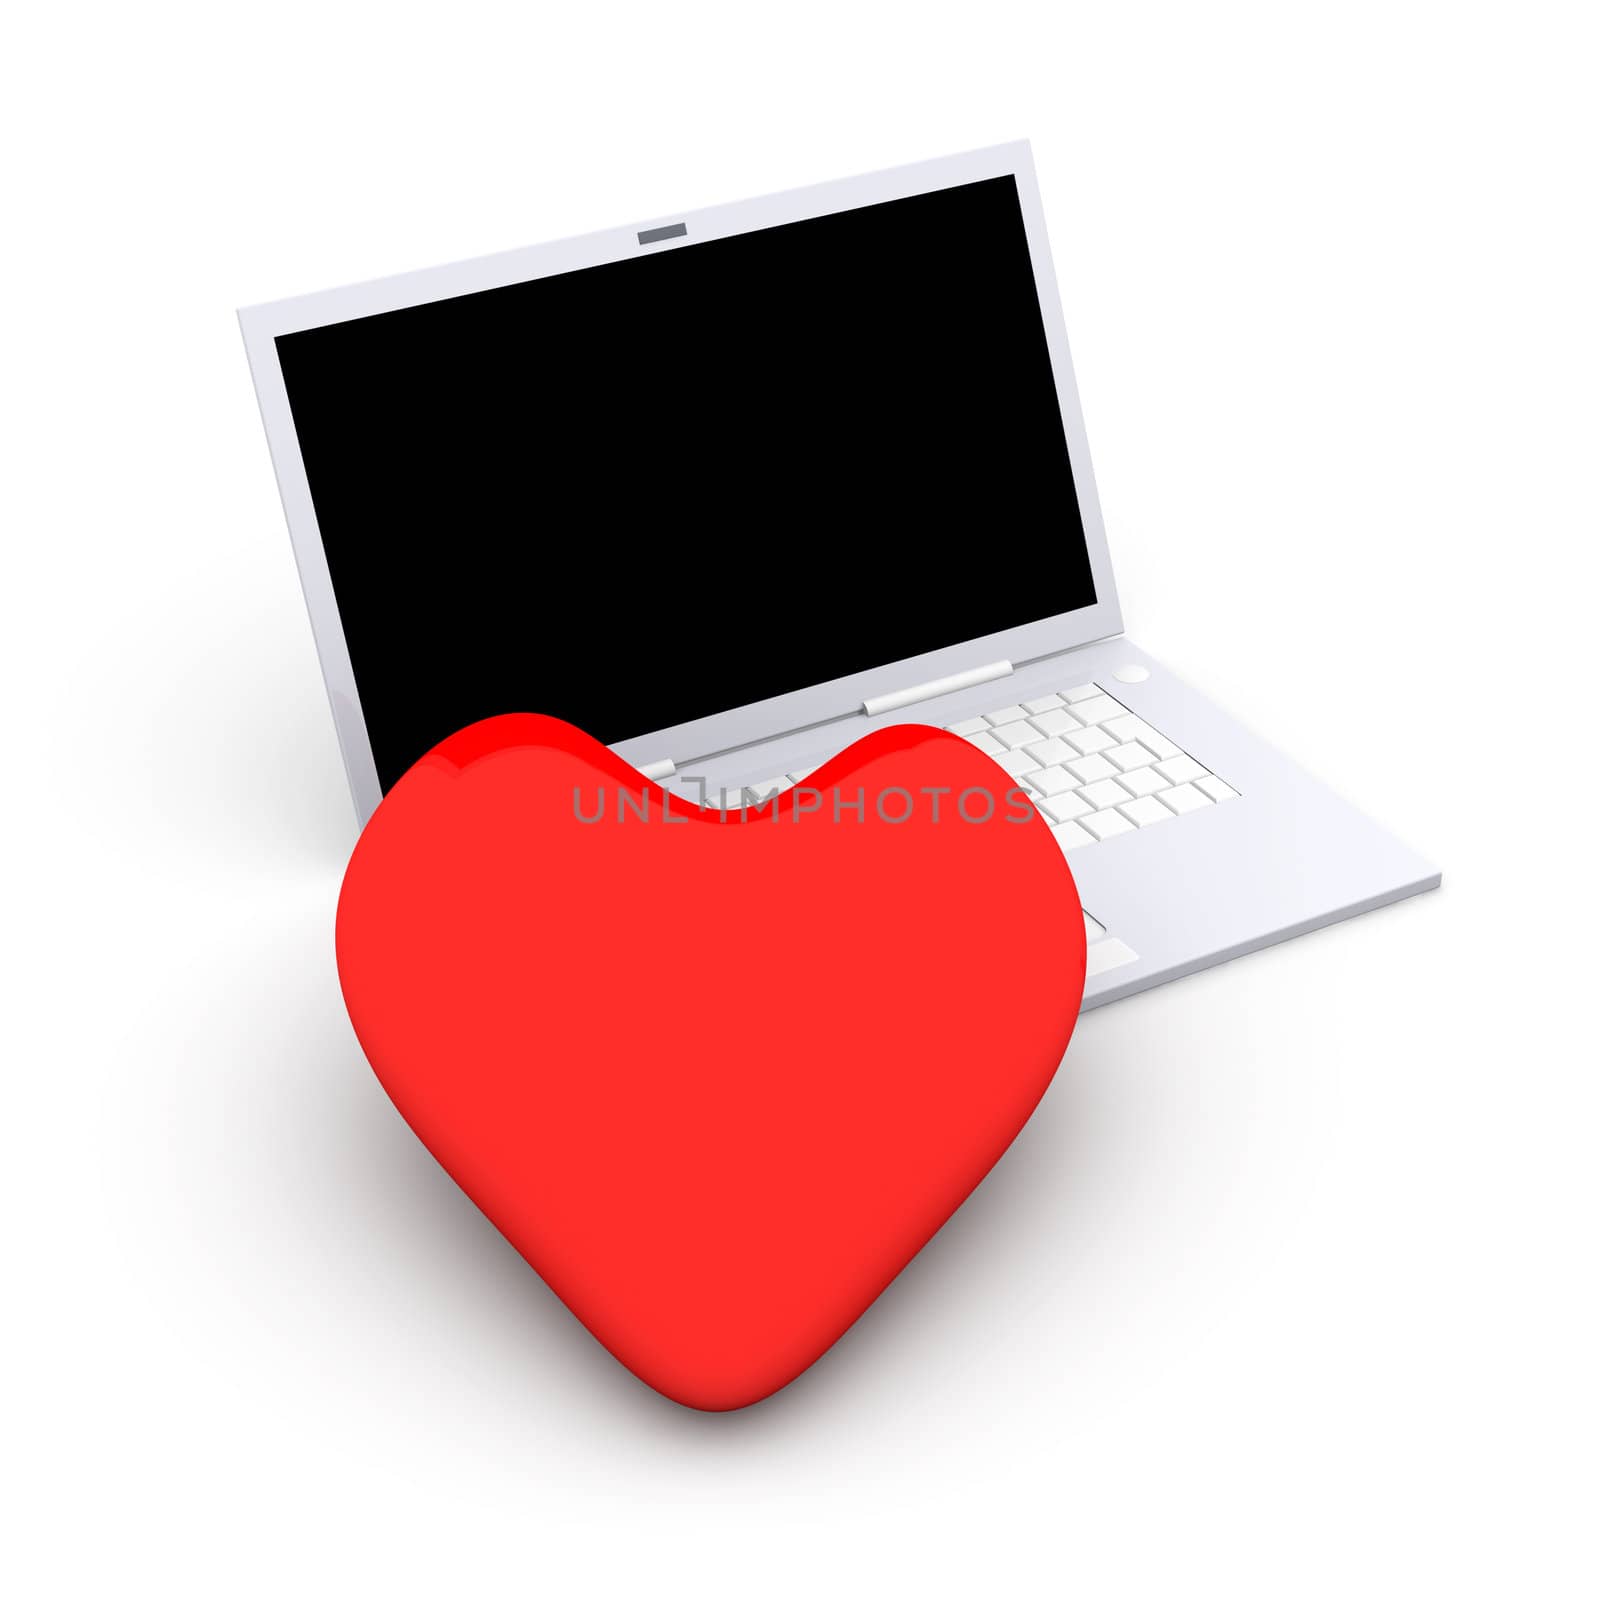 Laptops in Love	 by Spectral